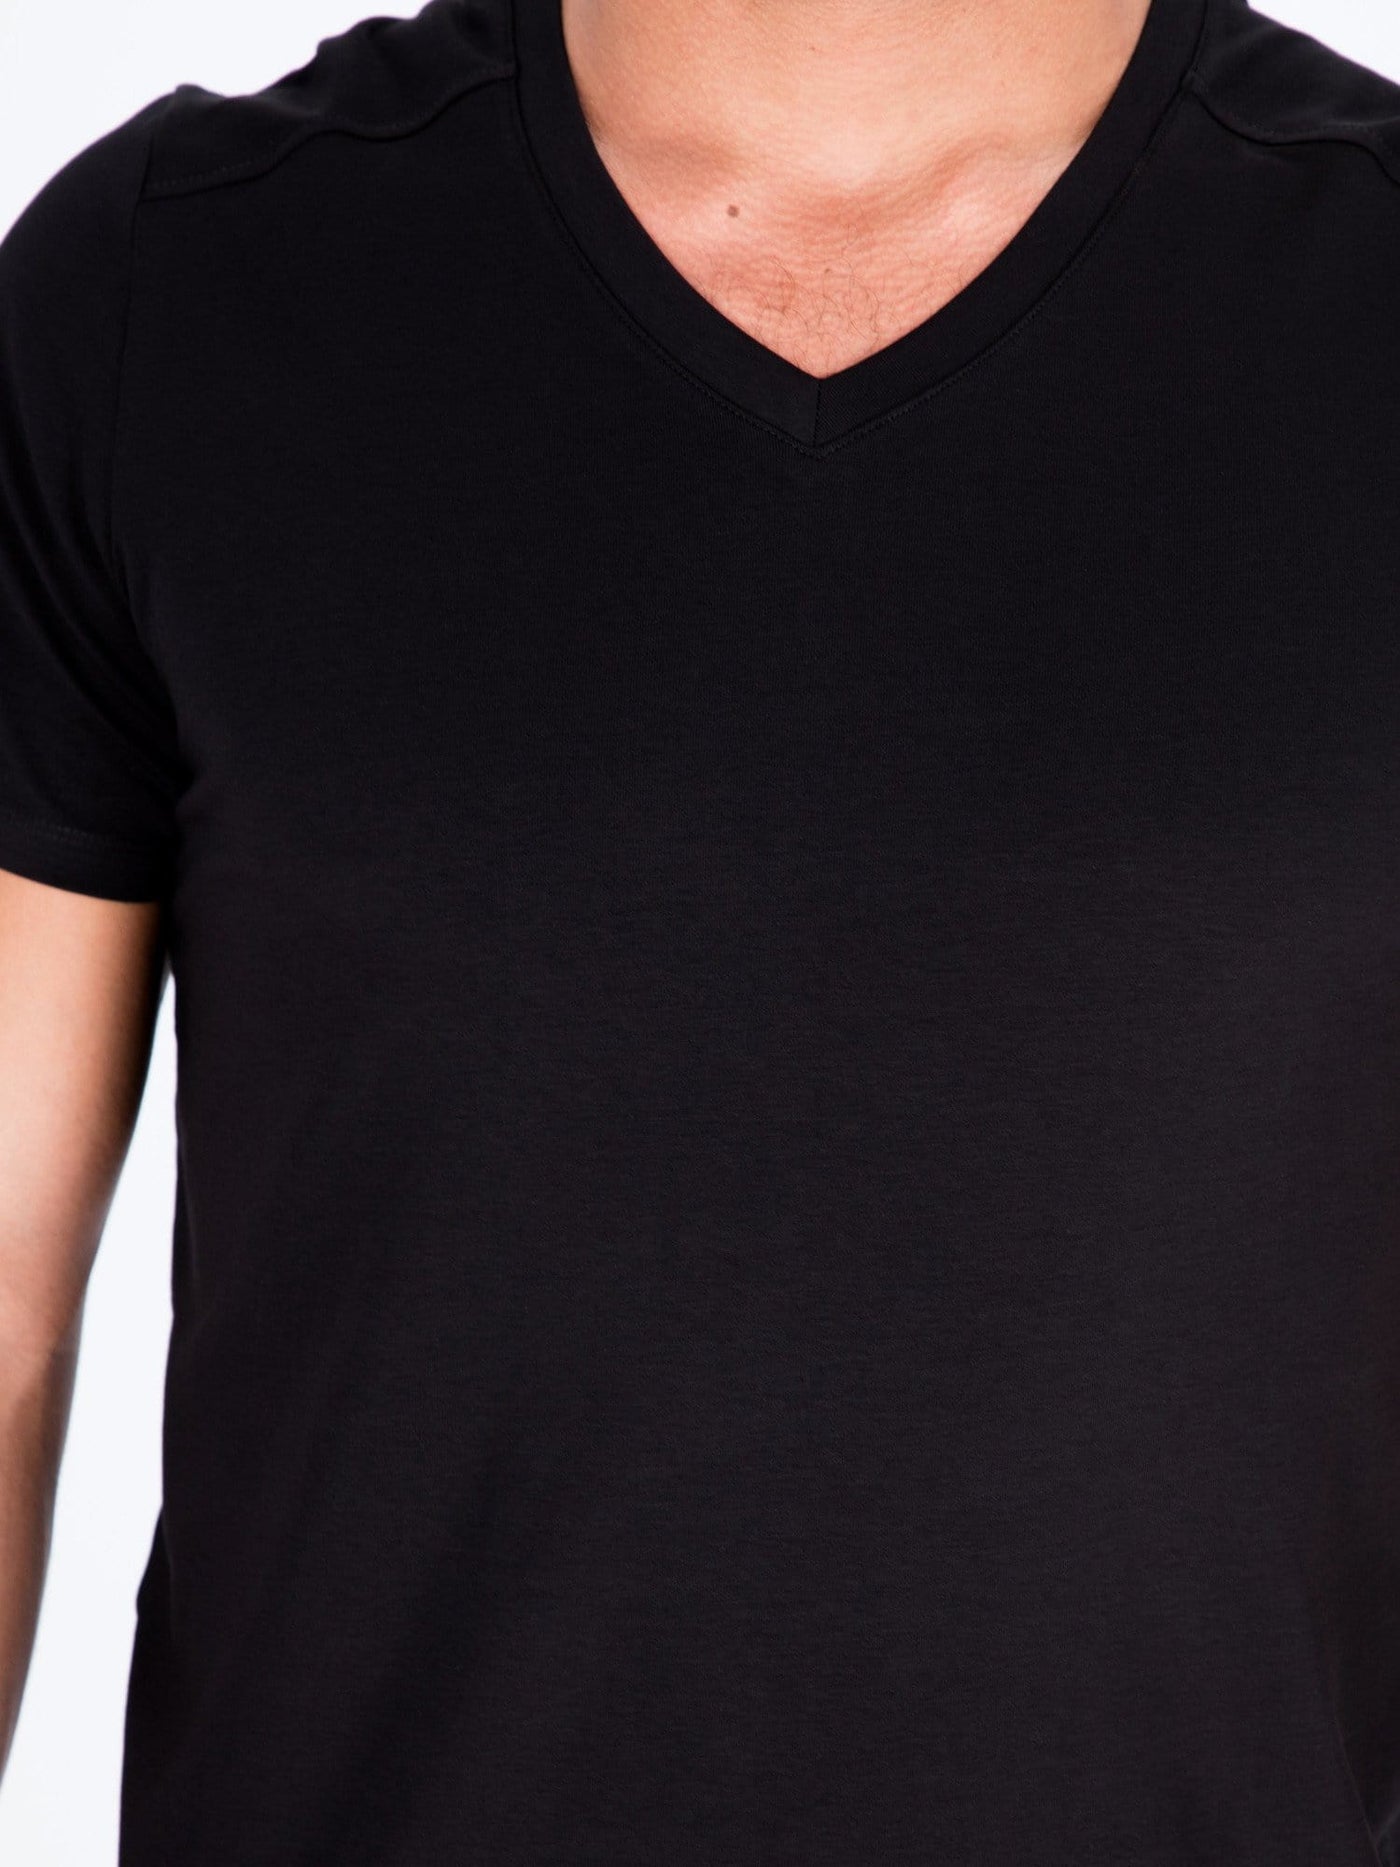 OR T-Shirts Black / S V-Neck Short Sleeve T-Shirt